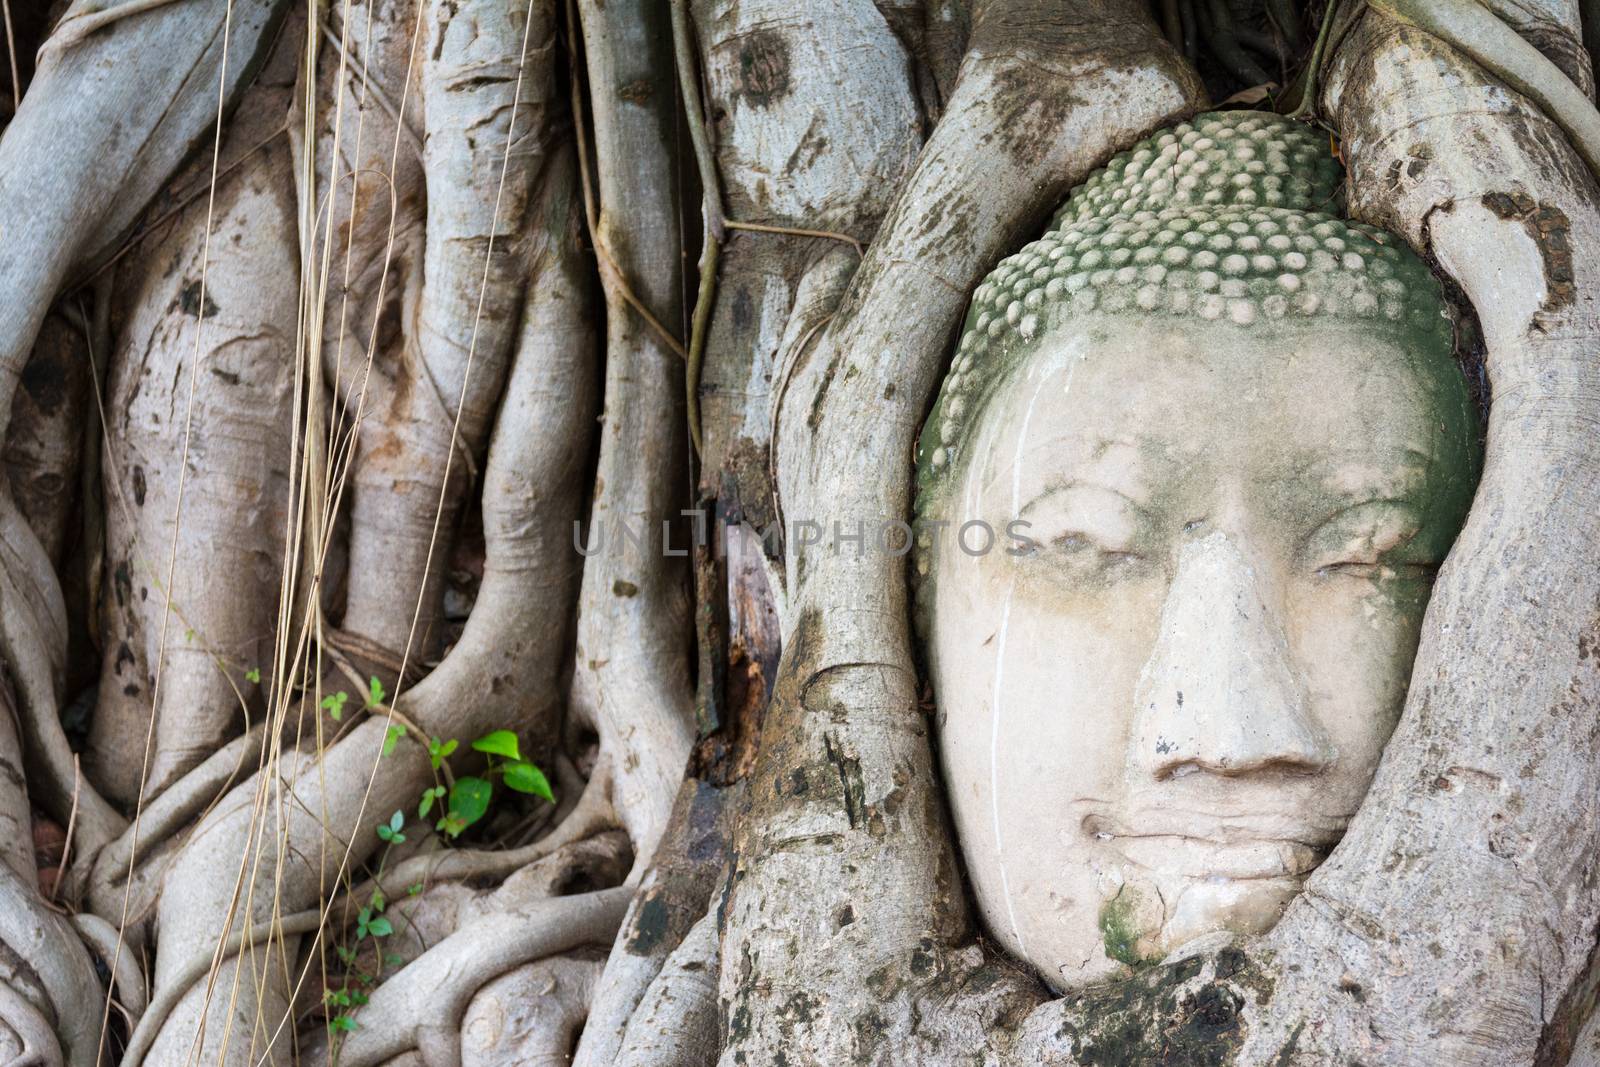 Head of sandstone Buddha by nicousnake